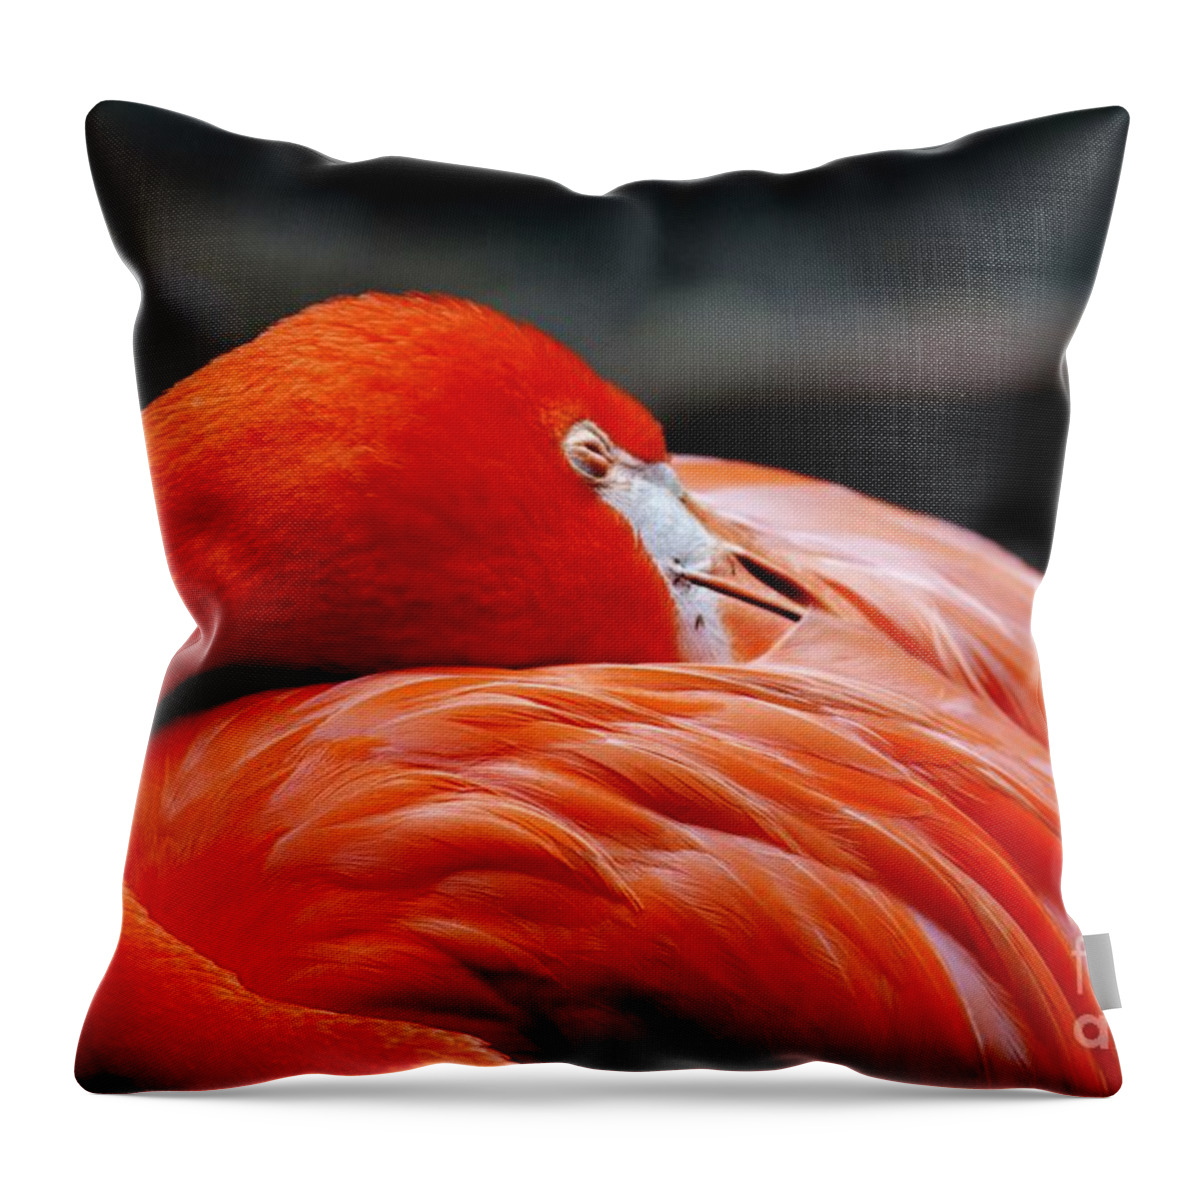 Sleeping Flamingo Throw Pillow featuring the photograph Sleeping Beauty by Julie Adair